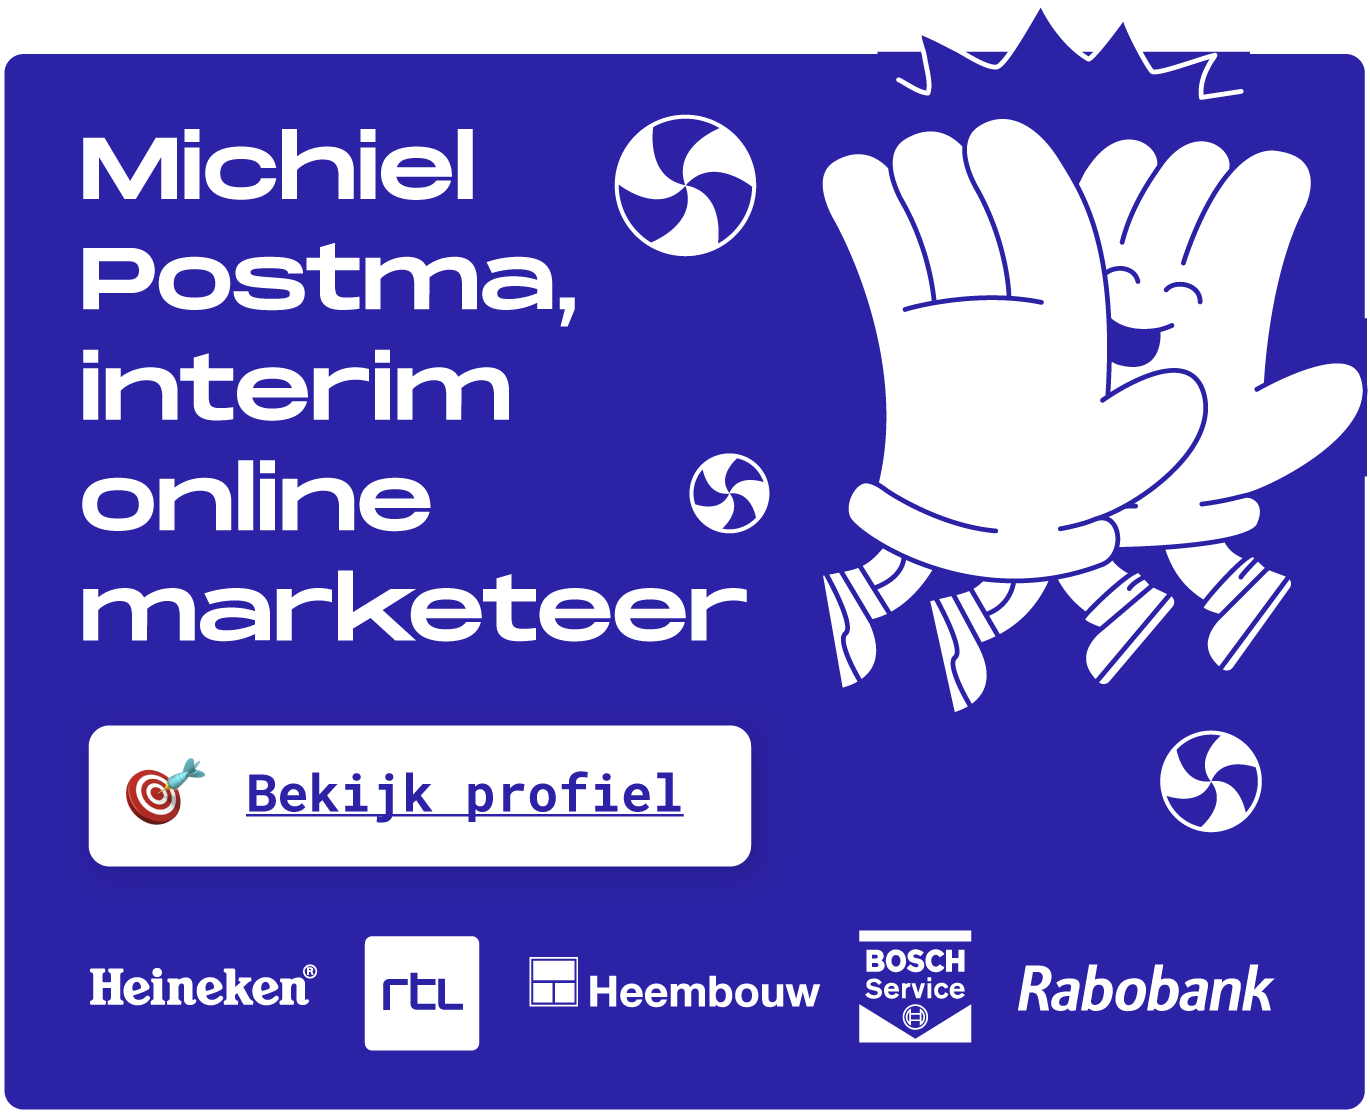 Interim online marketeer, Michiel Postma